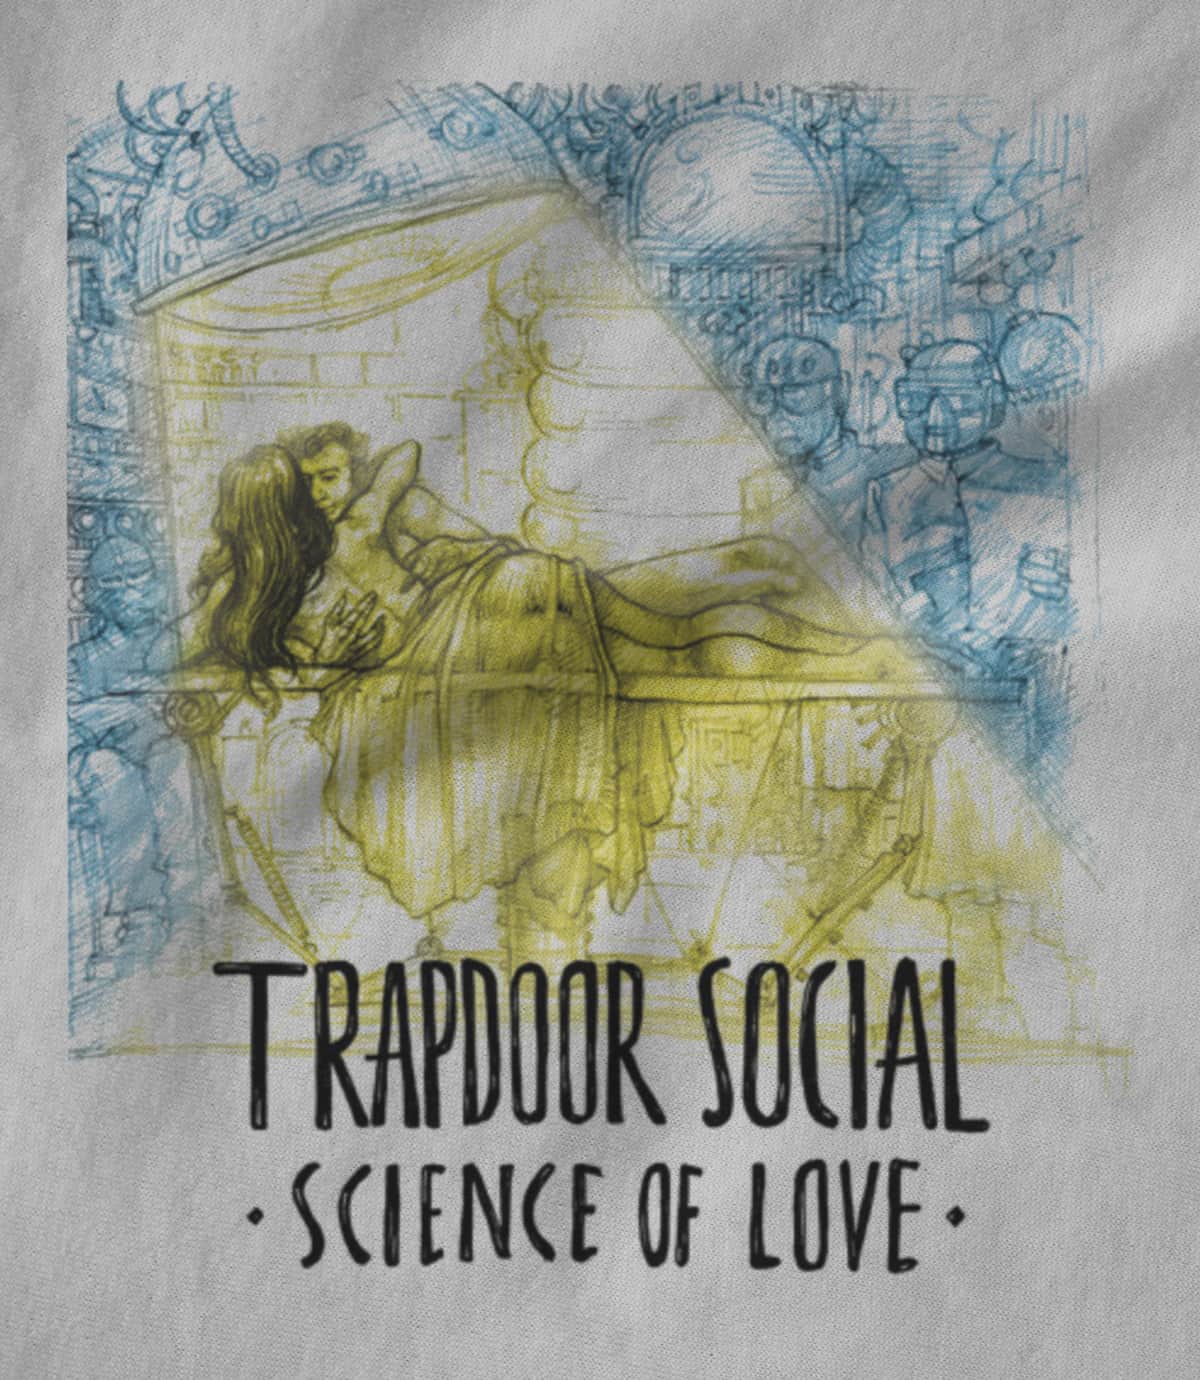 Trapdoor social science of love artwork 1481009854